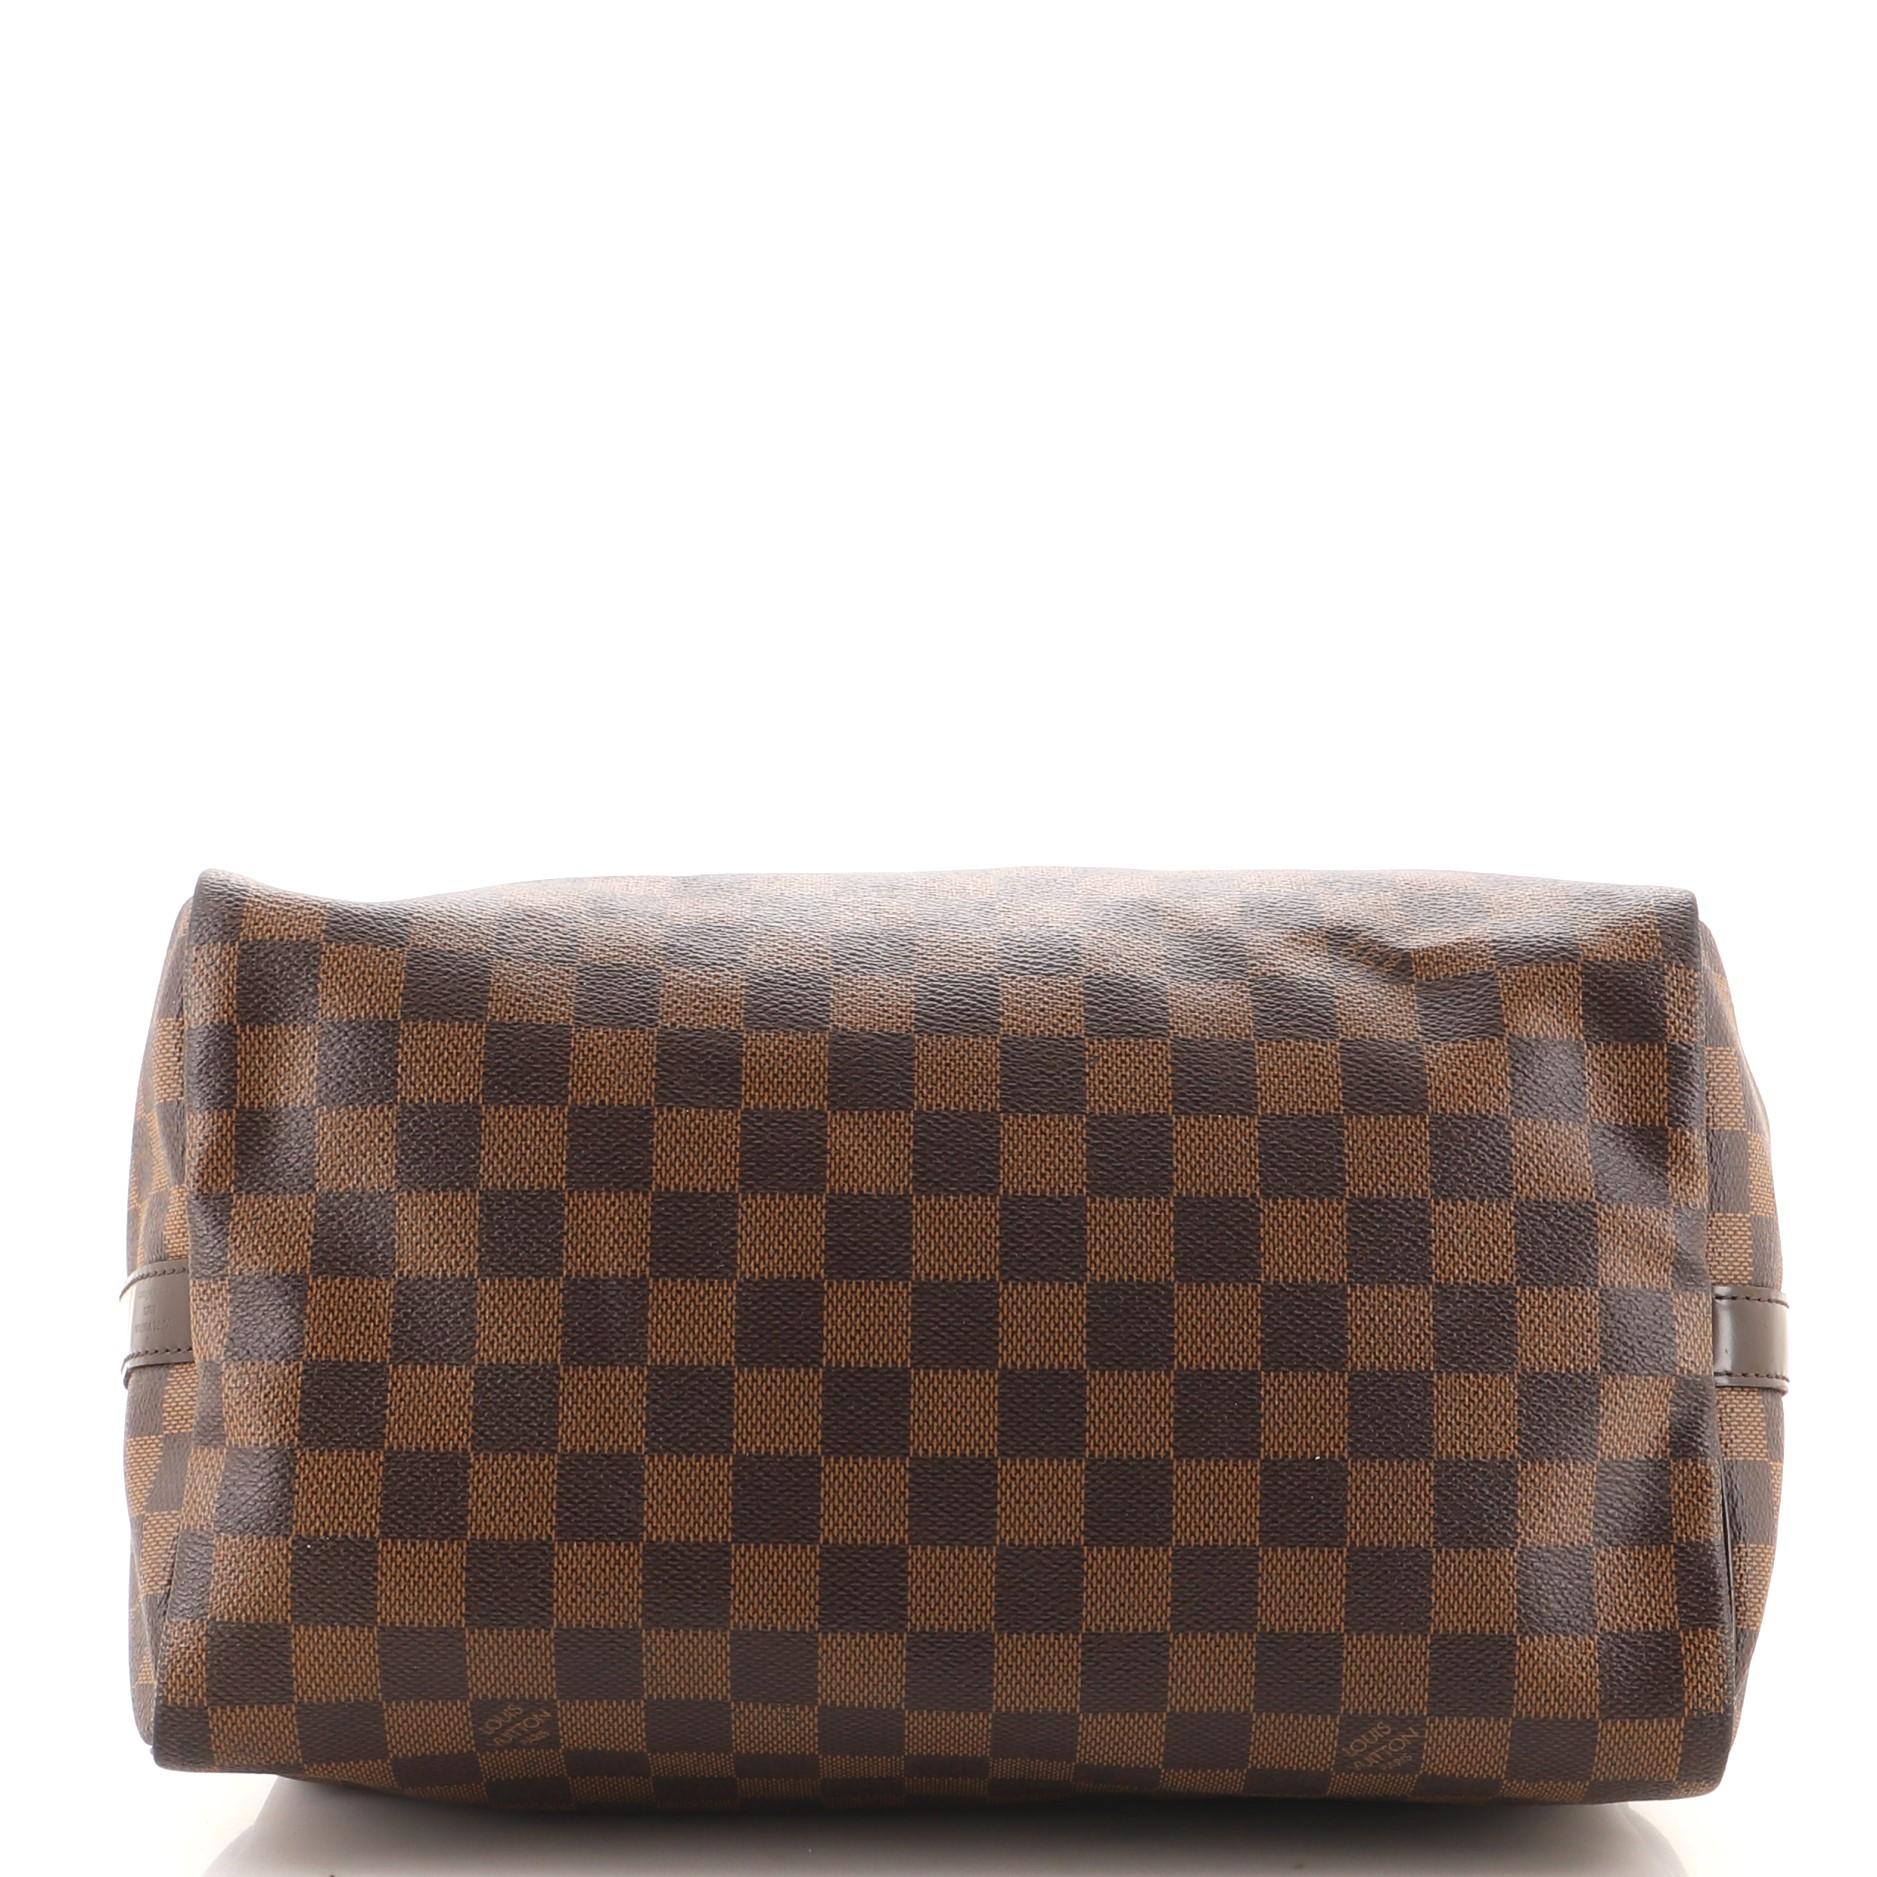 Women's or Men's Louis Vuitton Speedy Bandouliere Bag Damier 30 For Sale